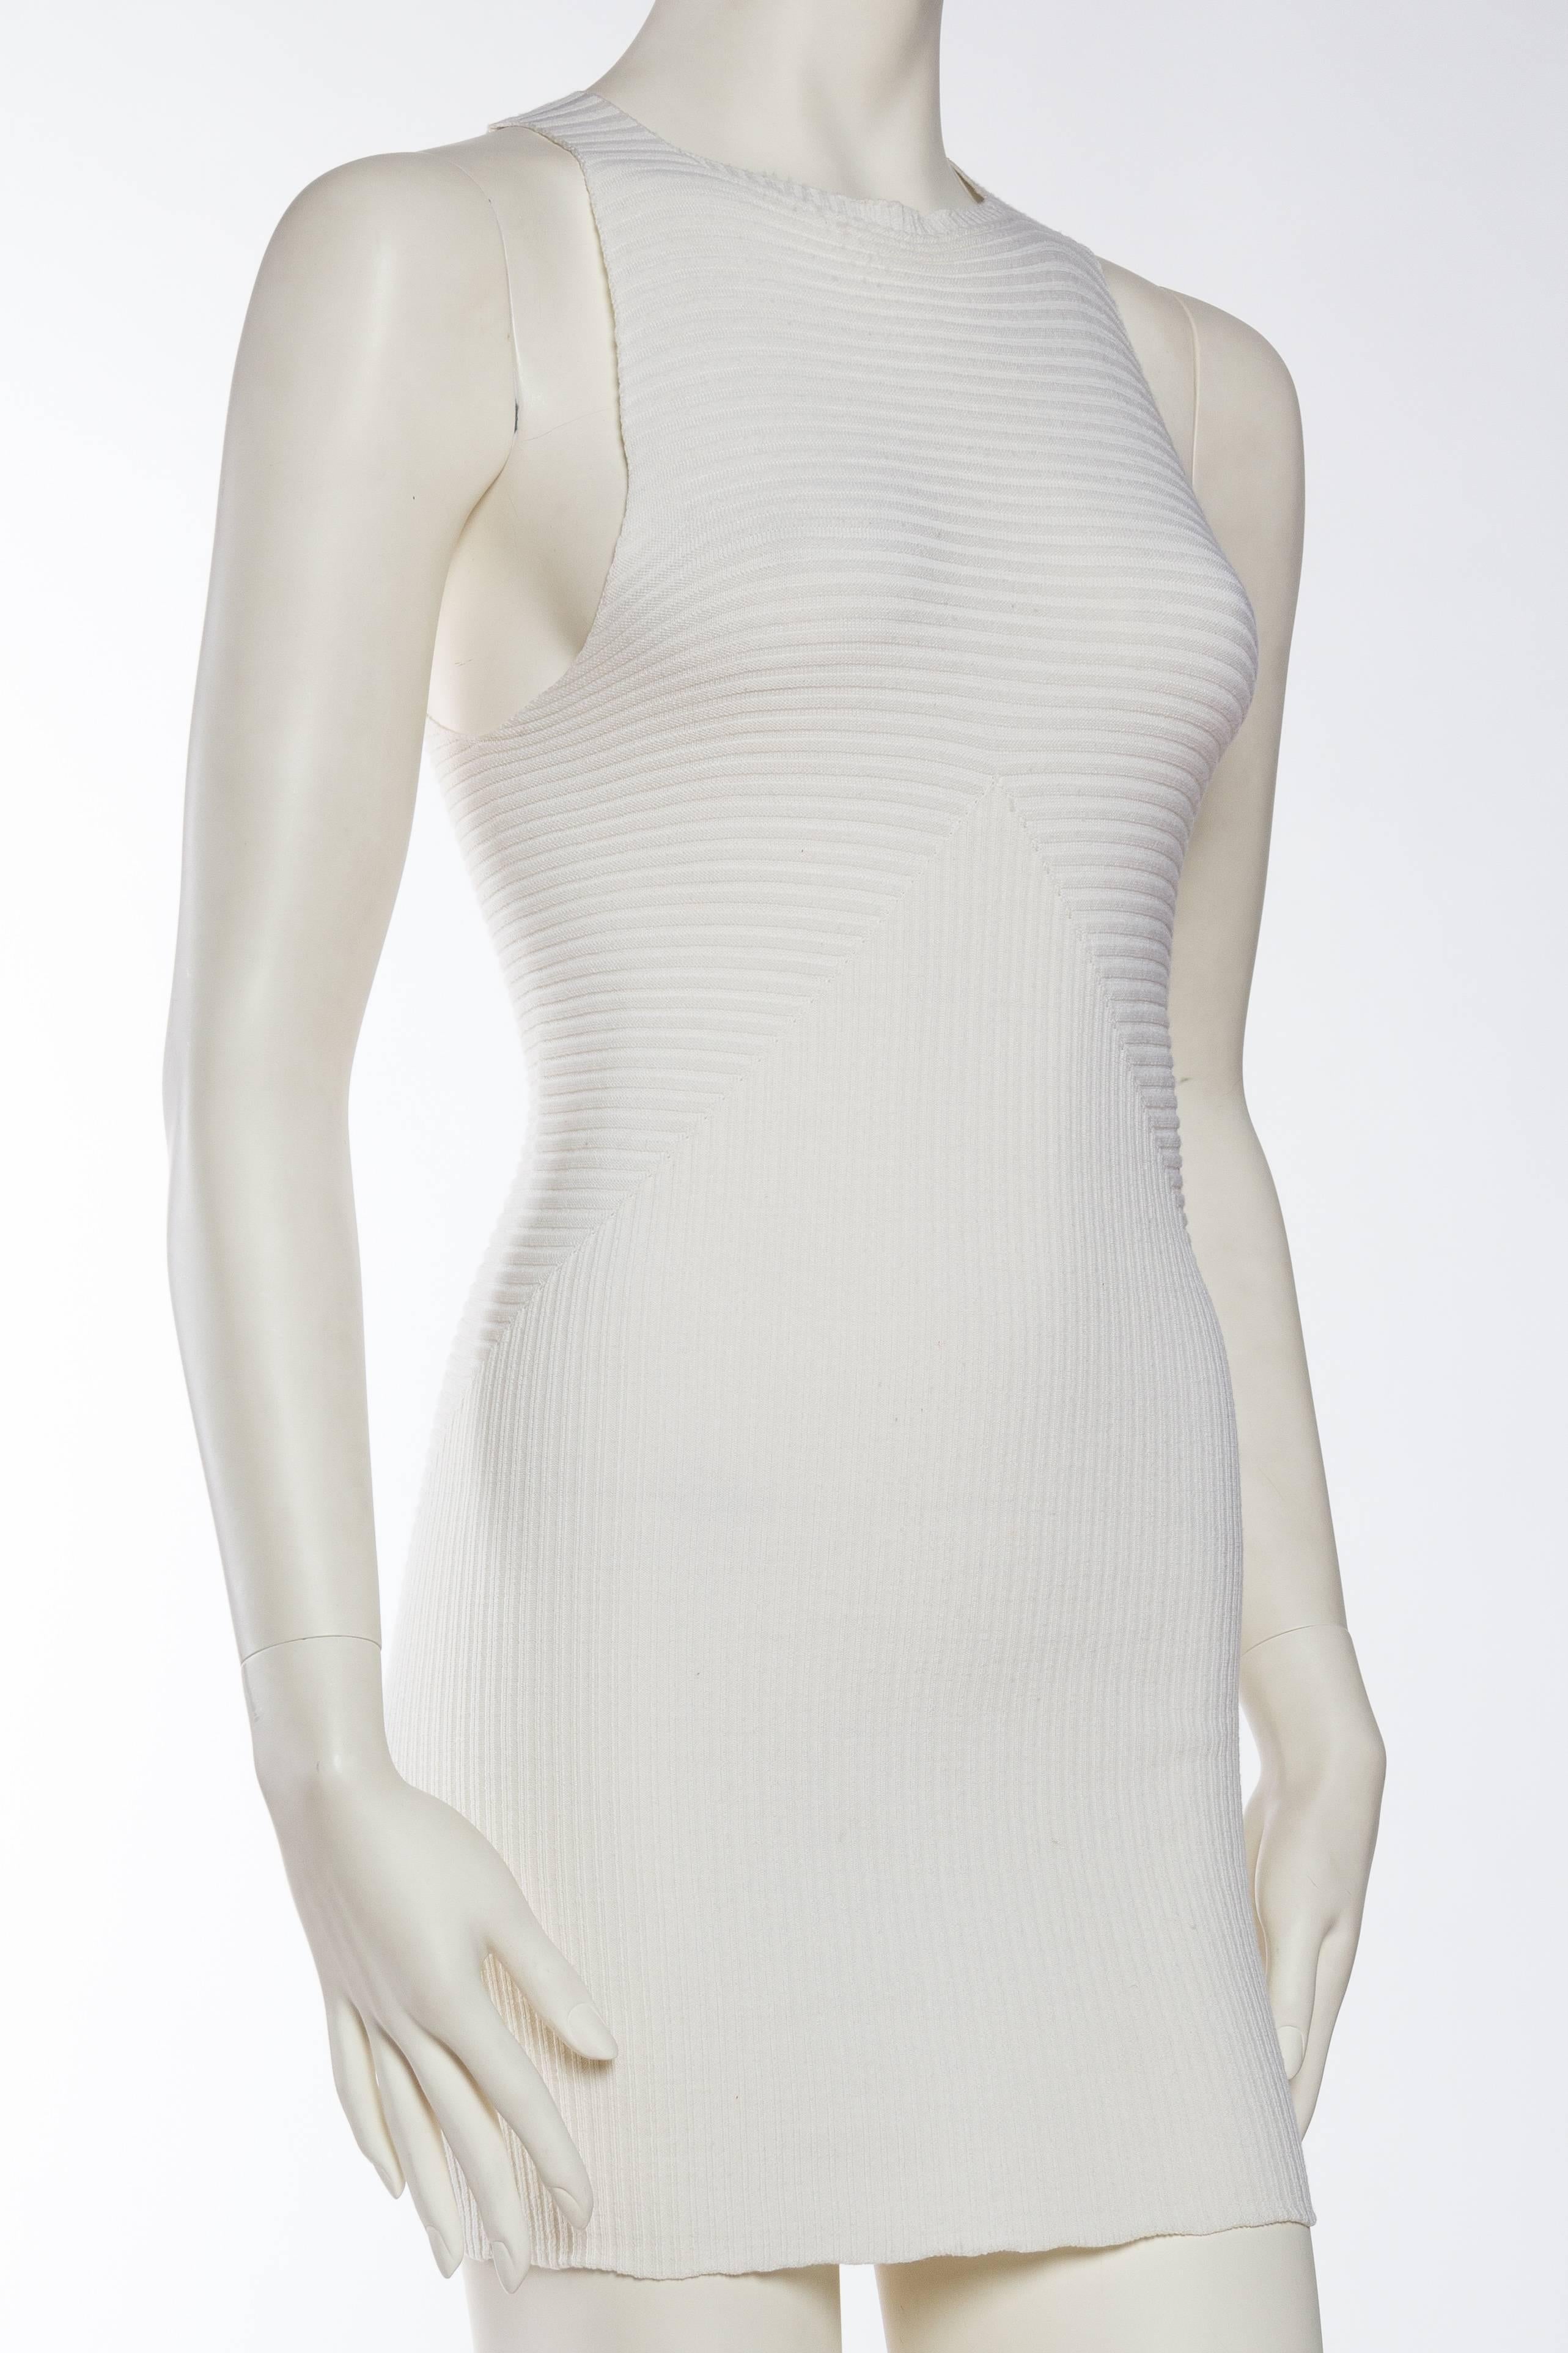 Women's Rick Owens Body-Con Minimalist Little White Dress